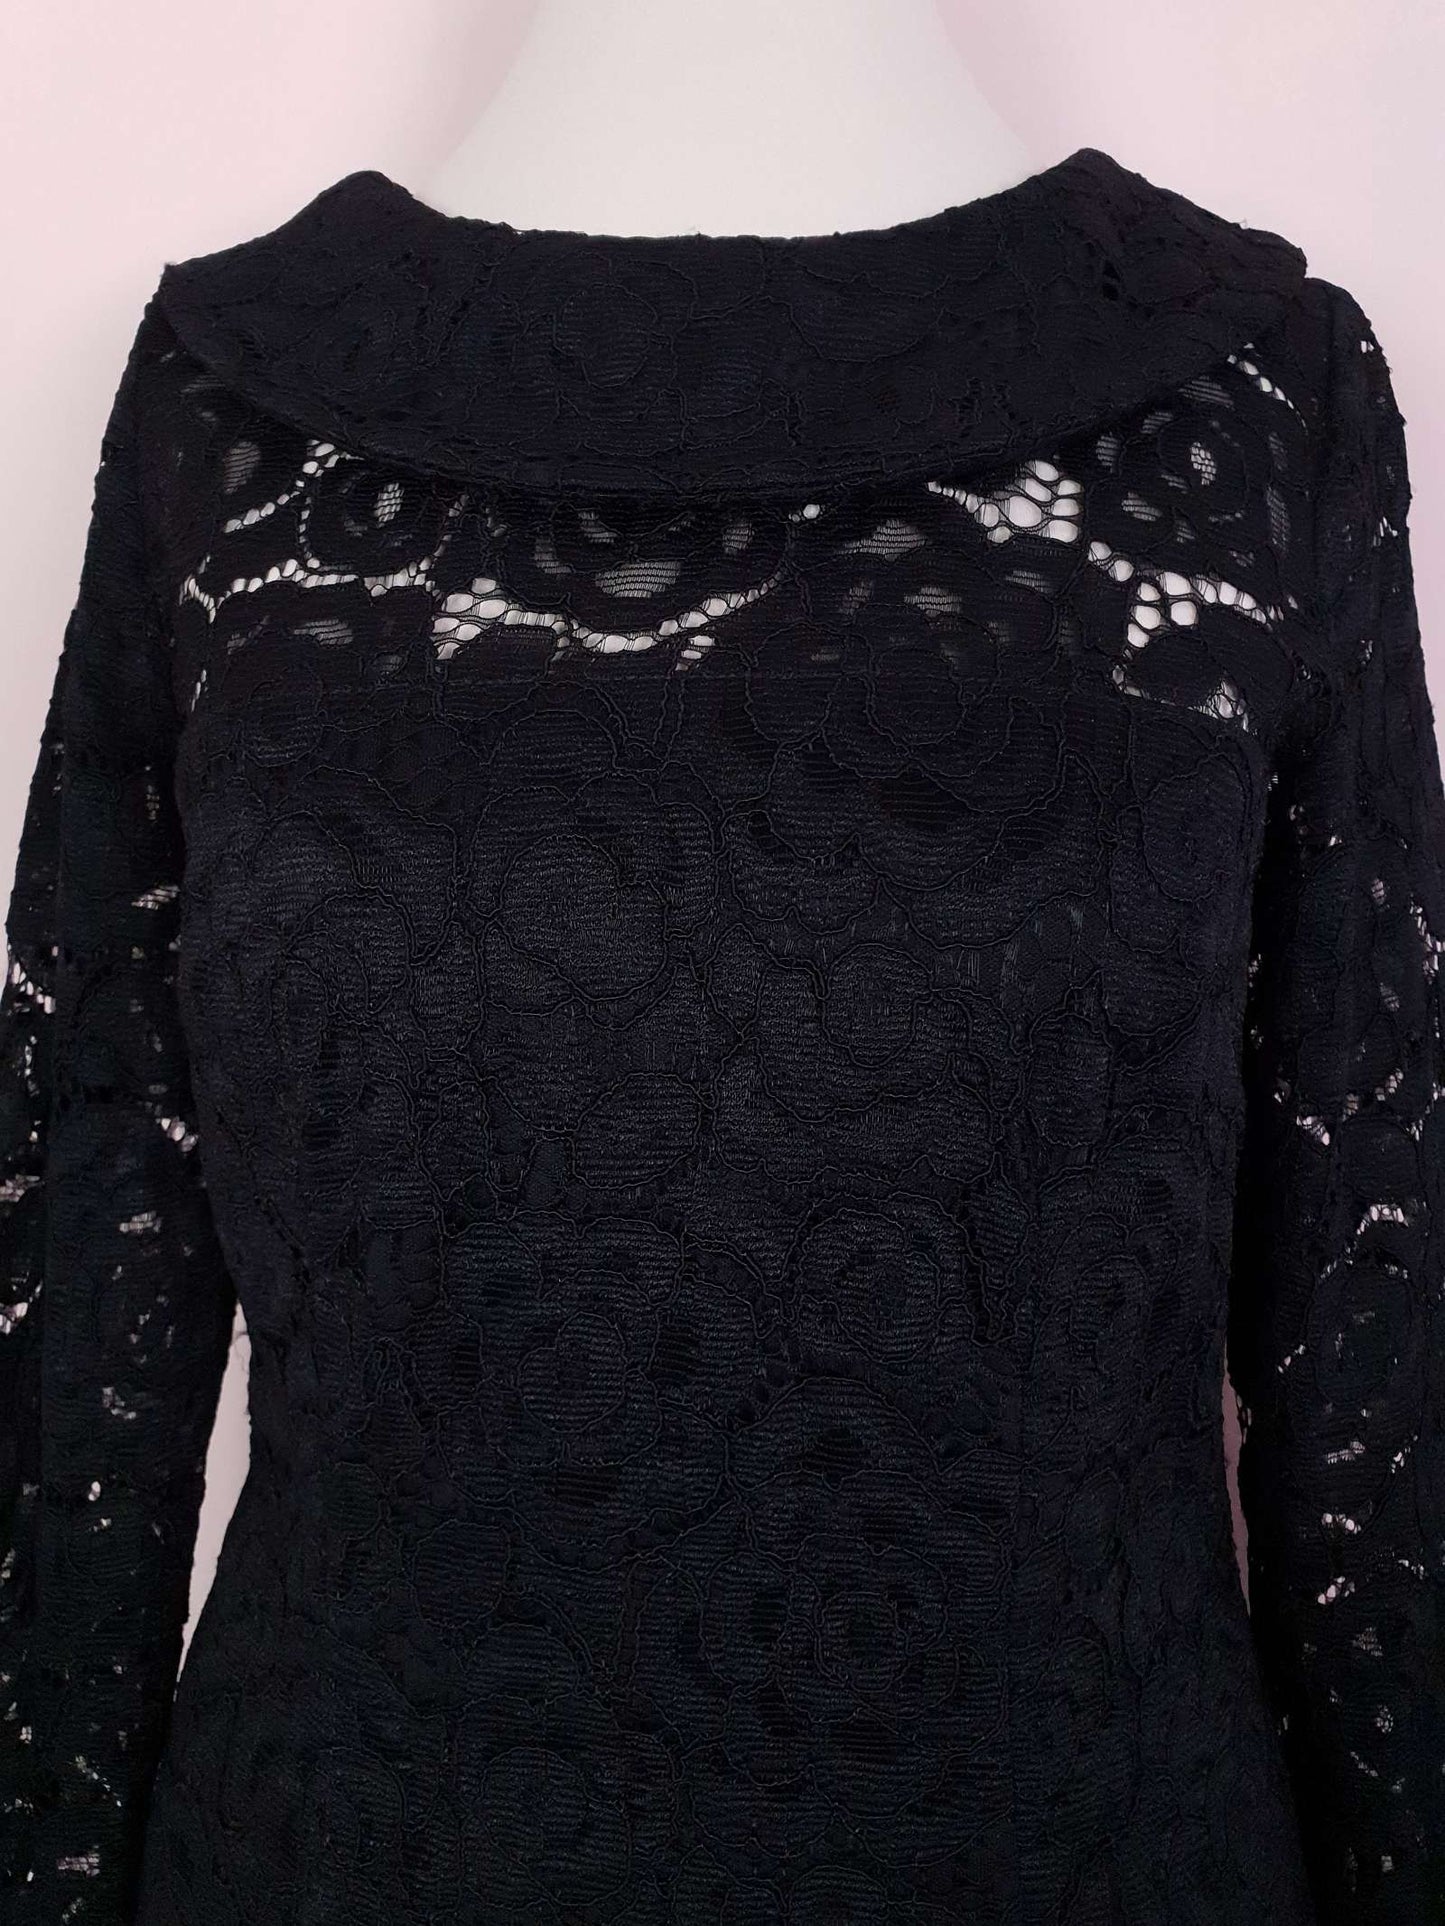 Vintage 90s Black Lace Dress Midi - Size 8